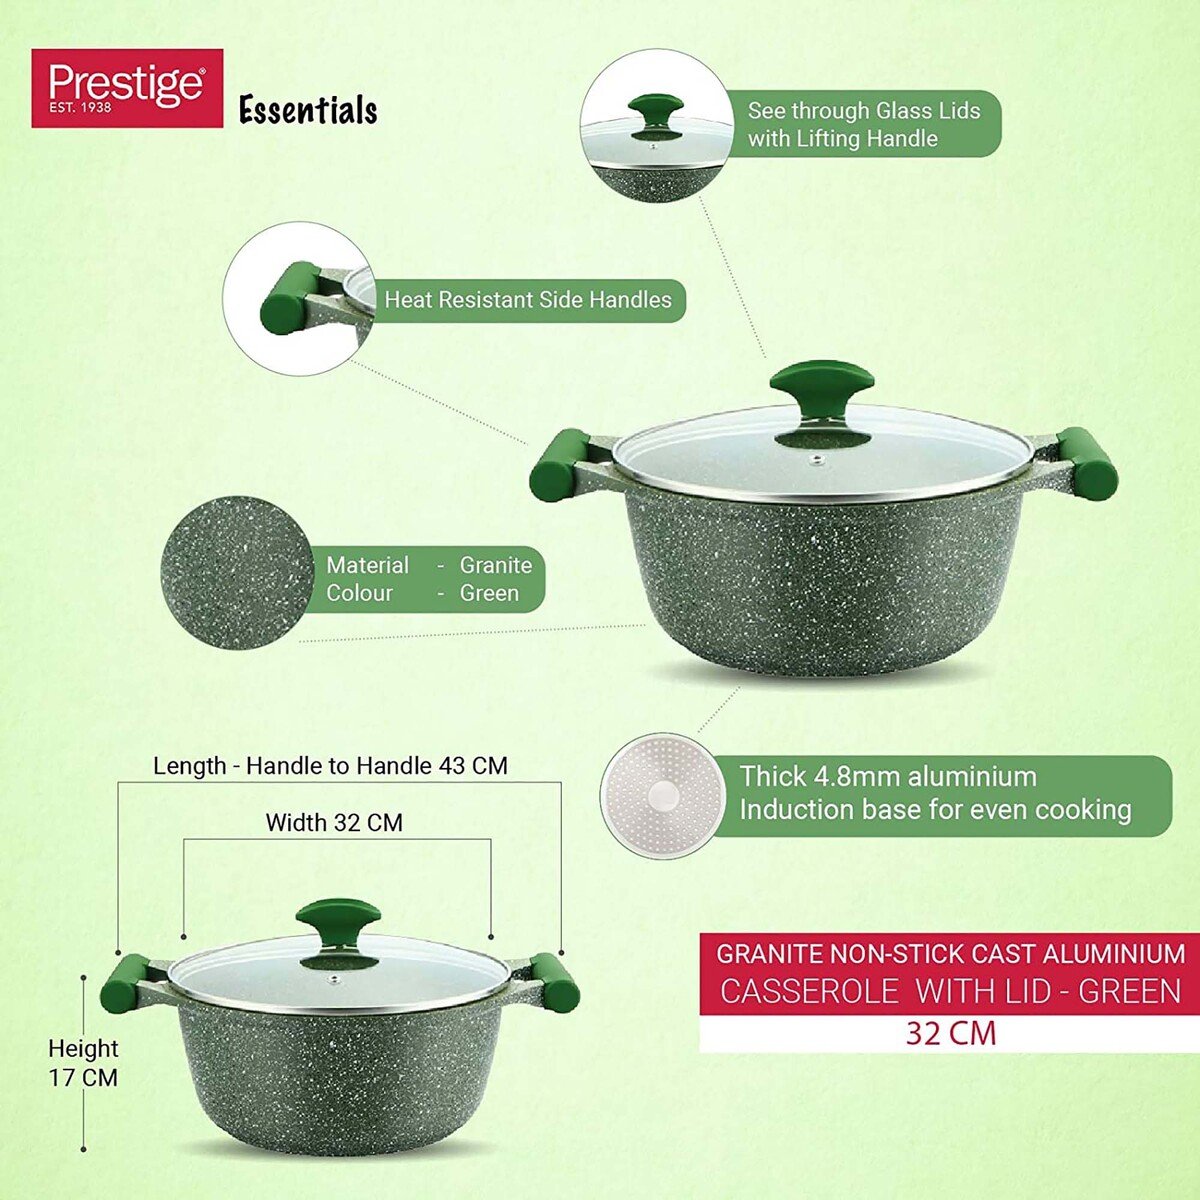 Prestige Essentials Granite Non-Stick Cast Aluminium Casserole with Lid, 32 cm, Green, PR81113